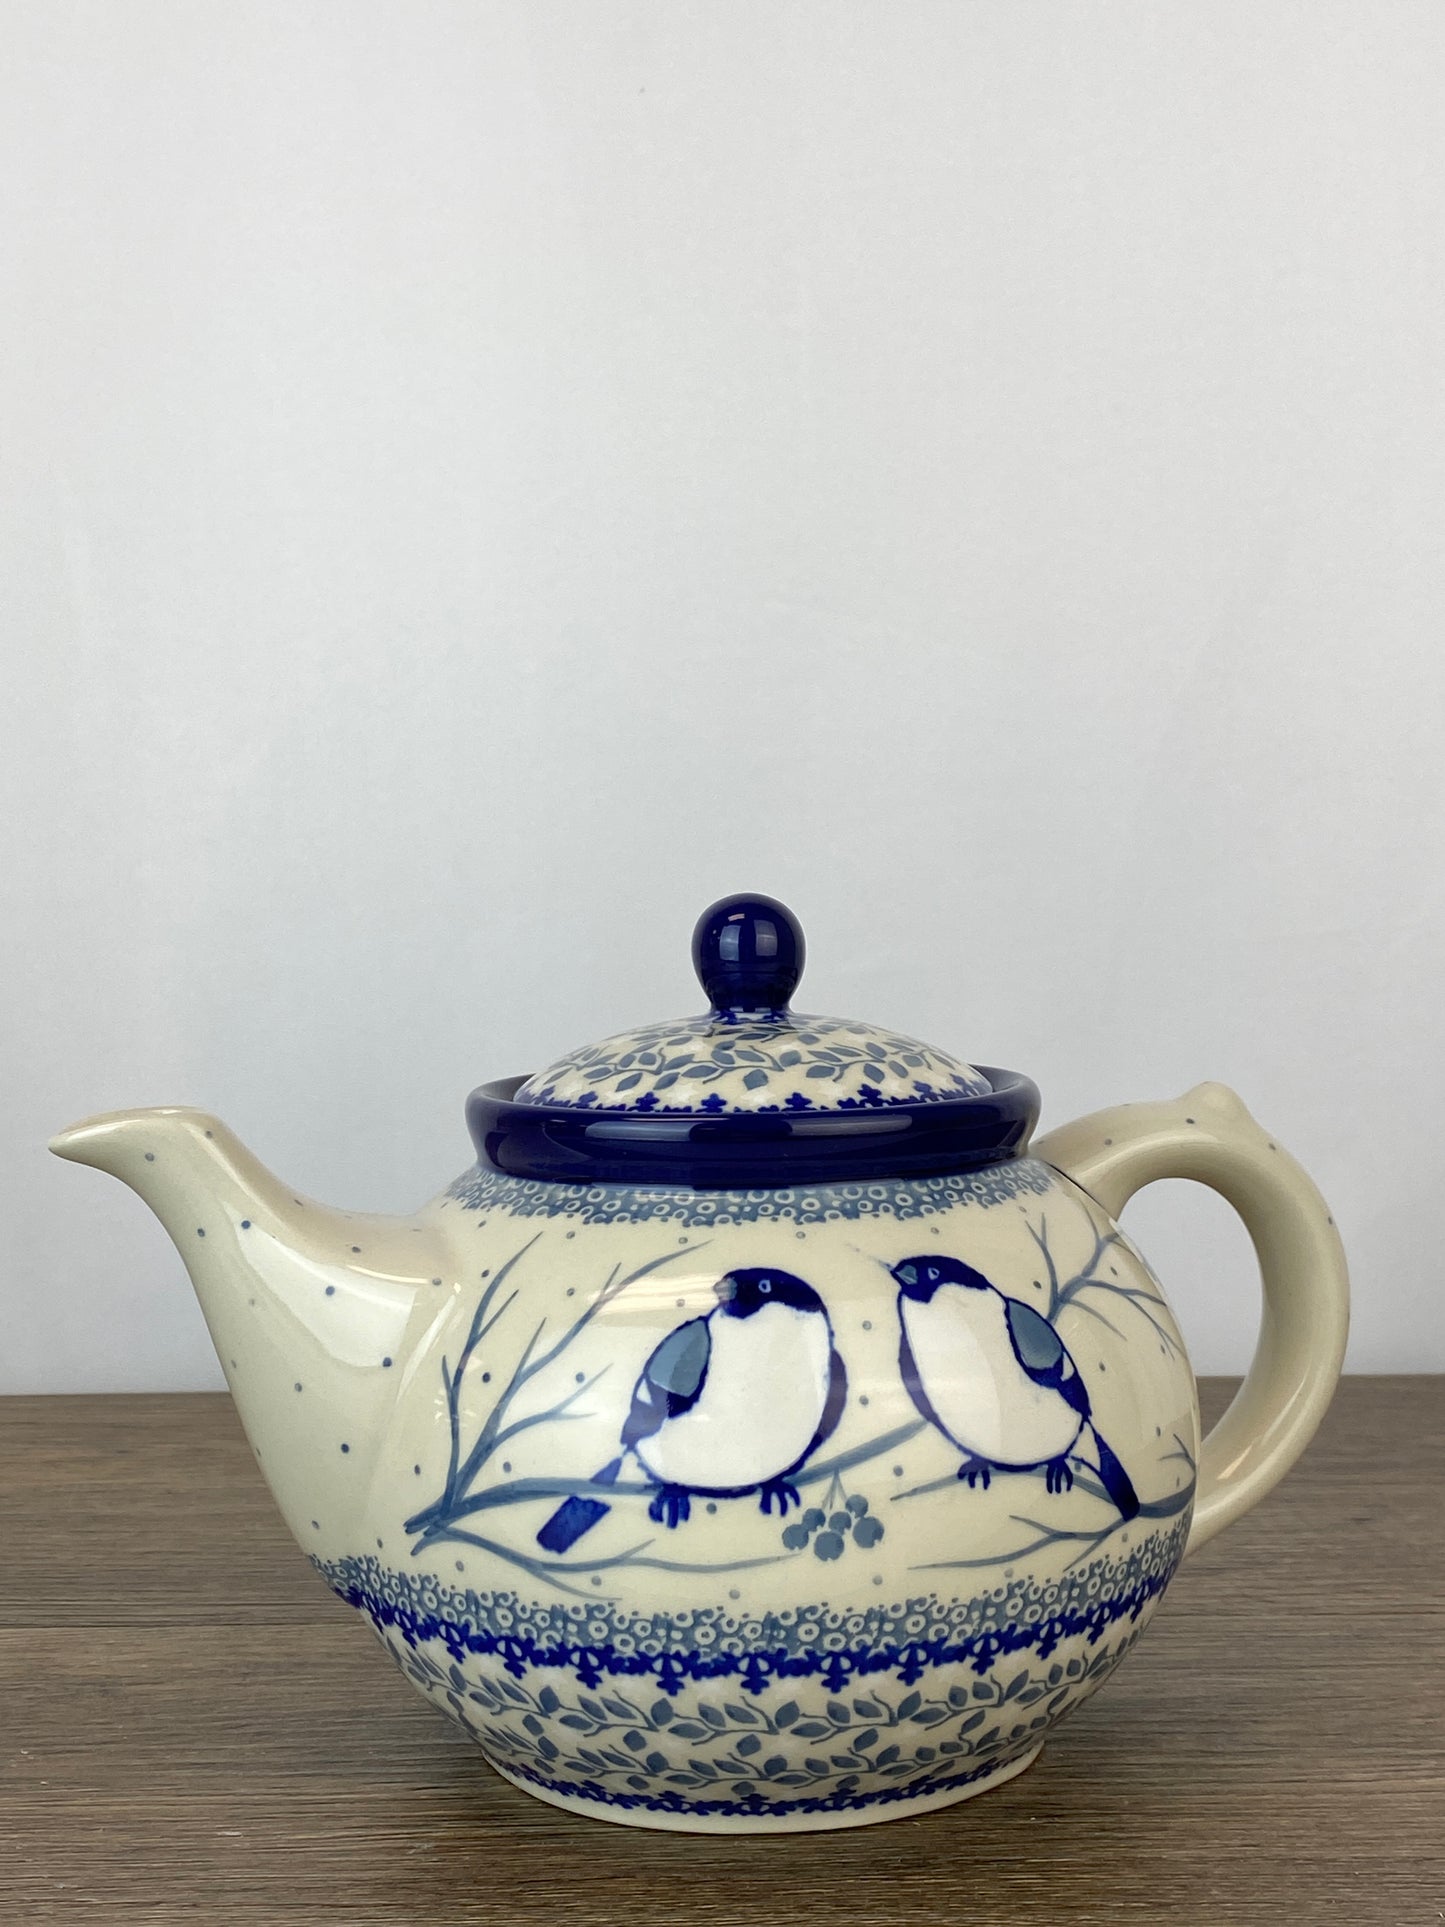 Unikat 5 Cup Teapot - Shape 60 - Pattern U4830